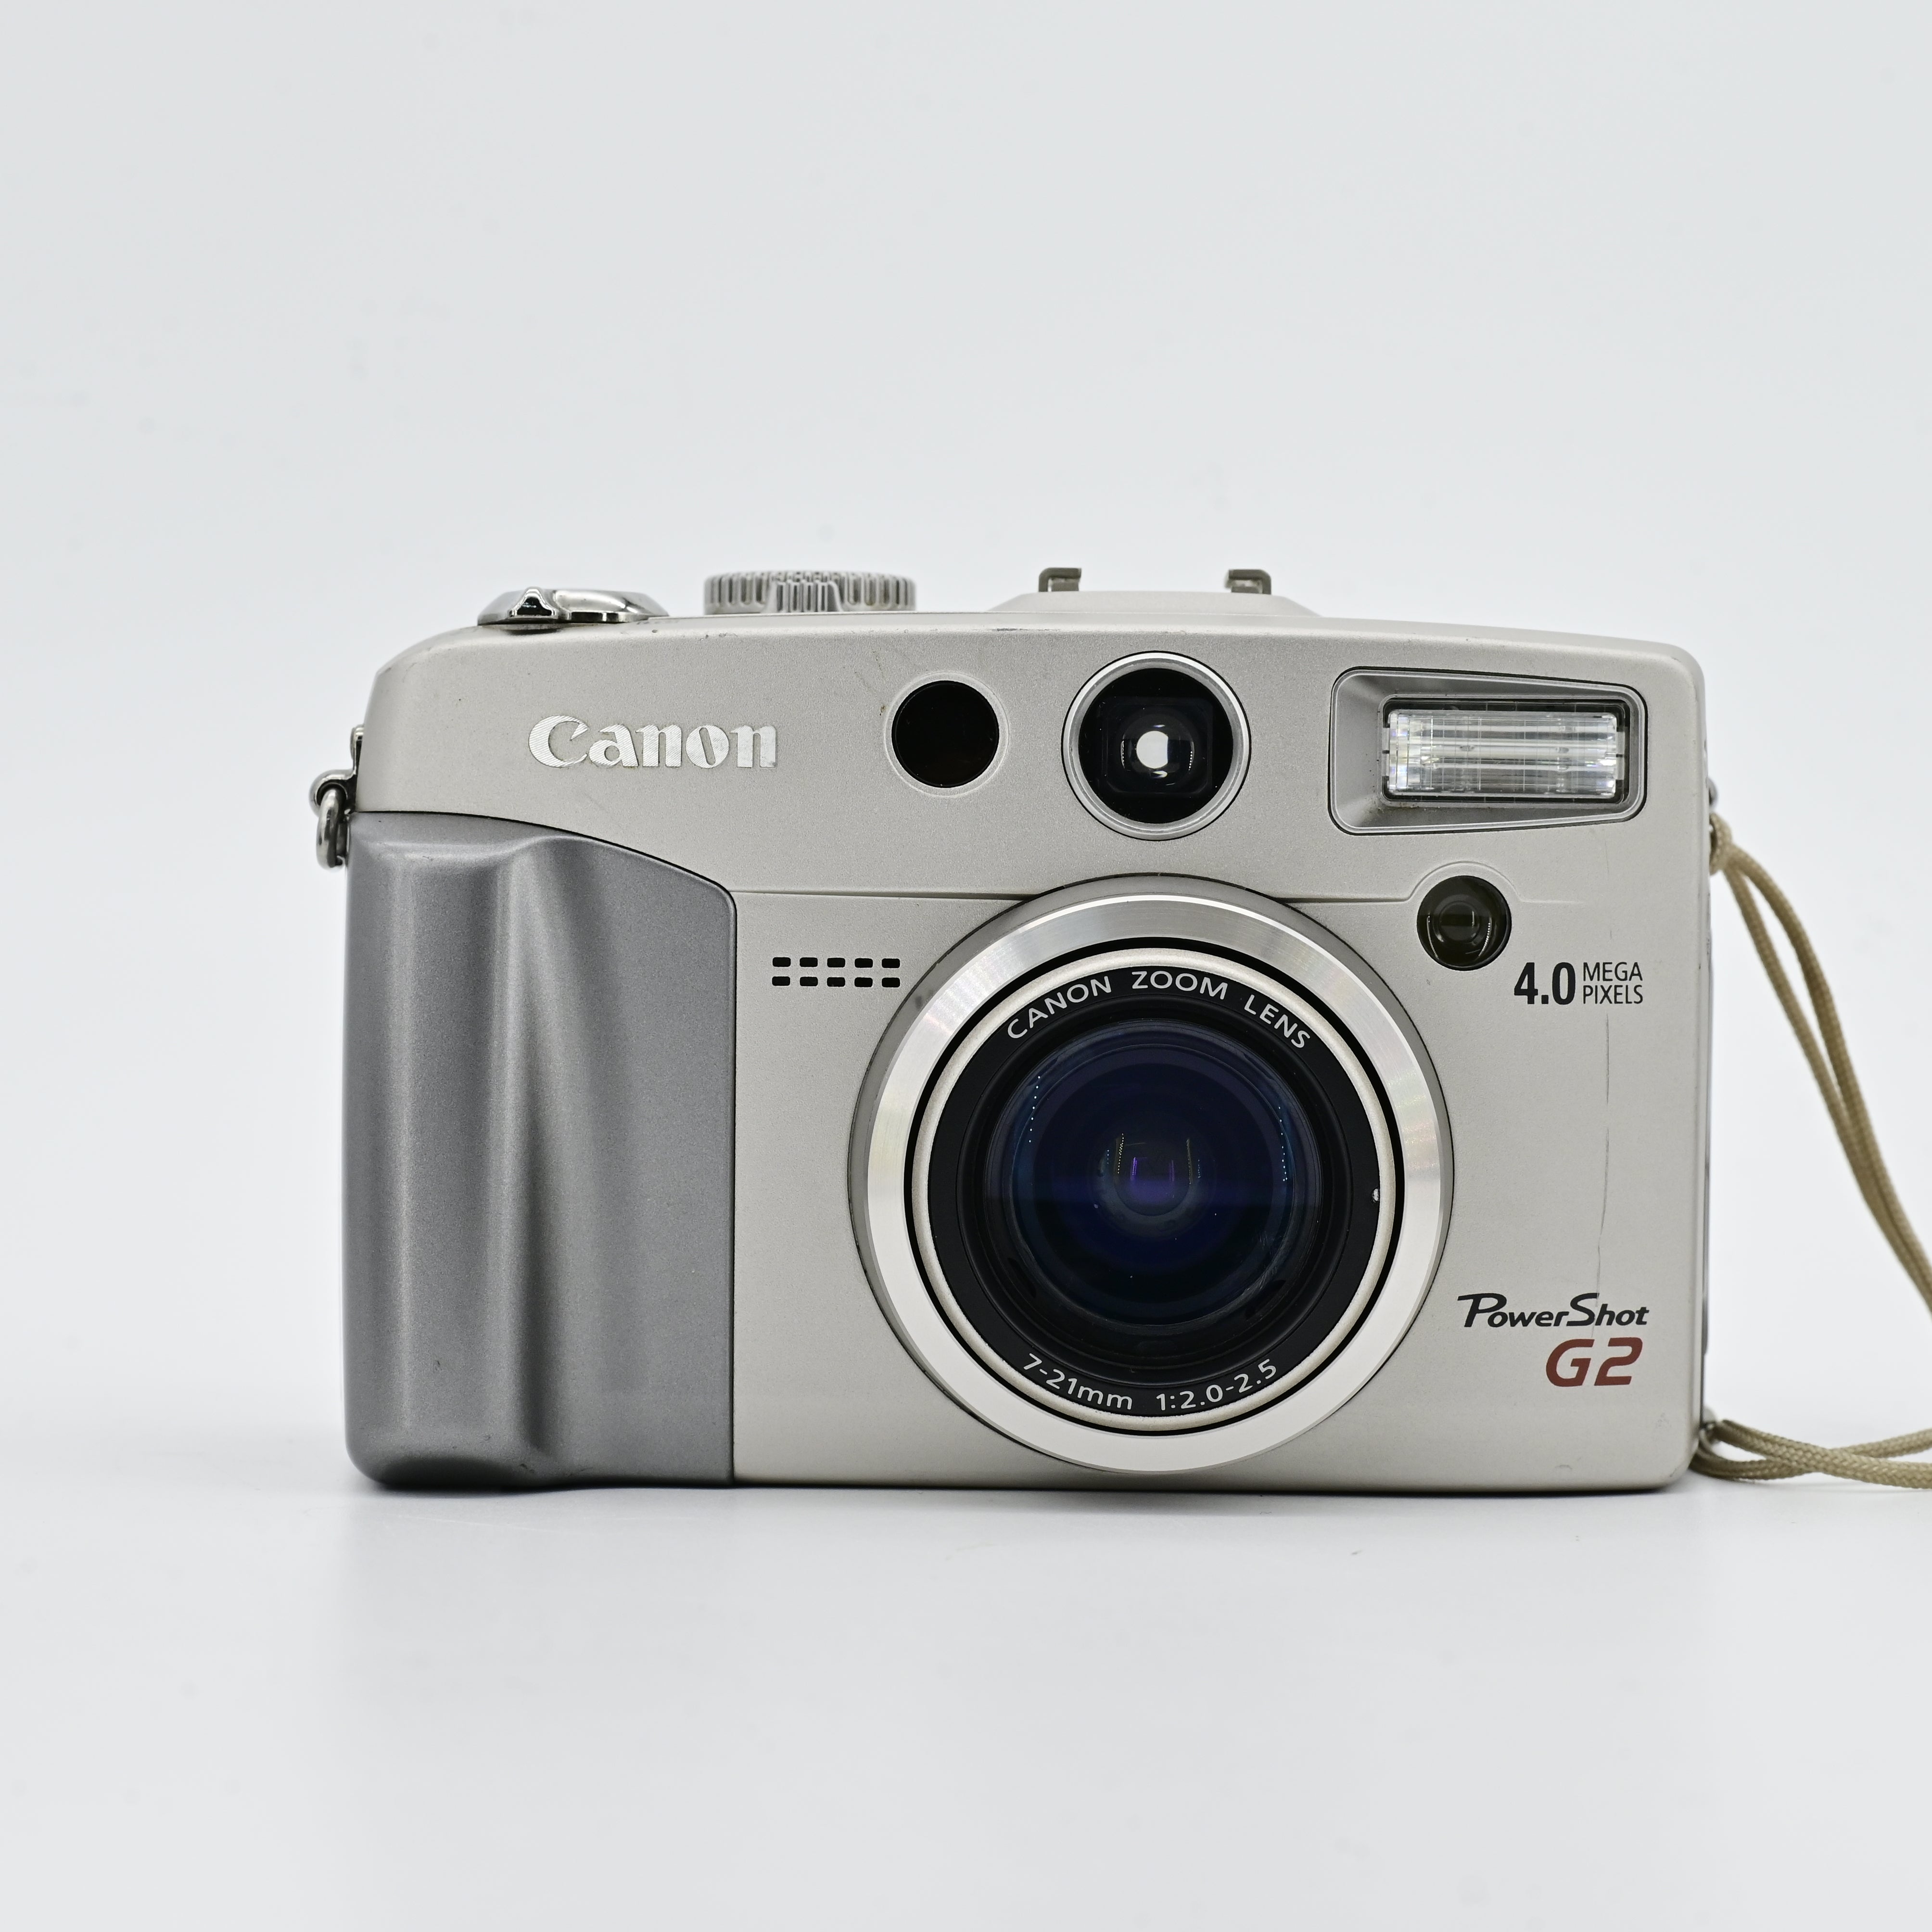 Canon PowerShot G2 CCD Digital Camera